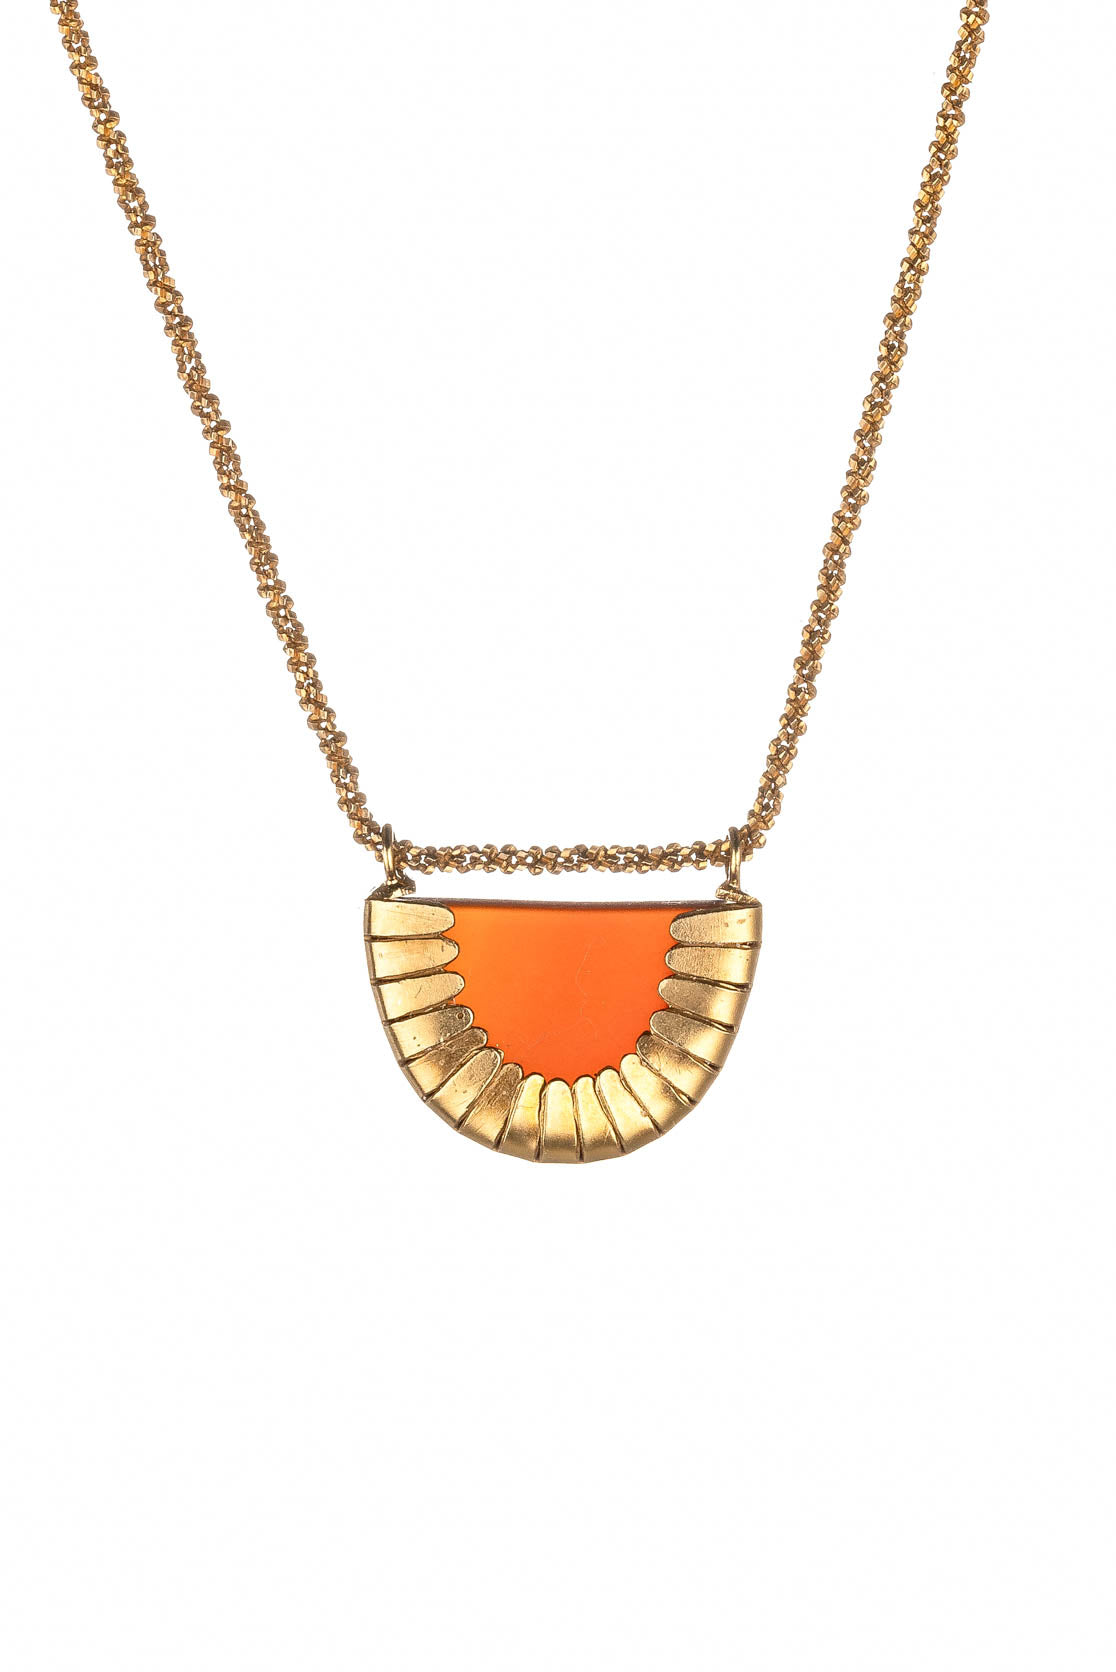 Handmade gold necklace with orange pendant